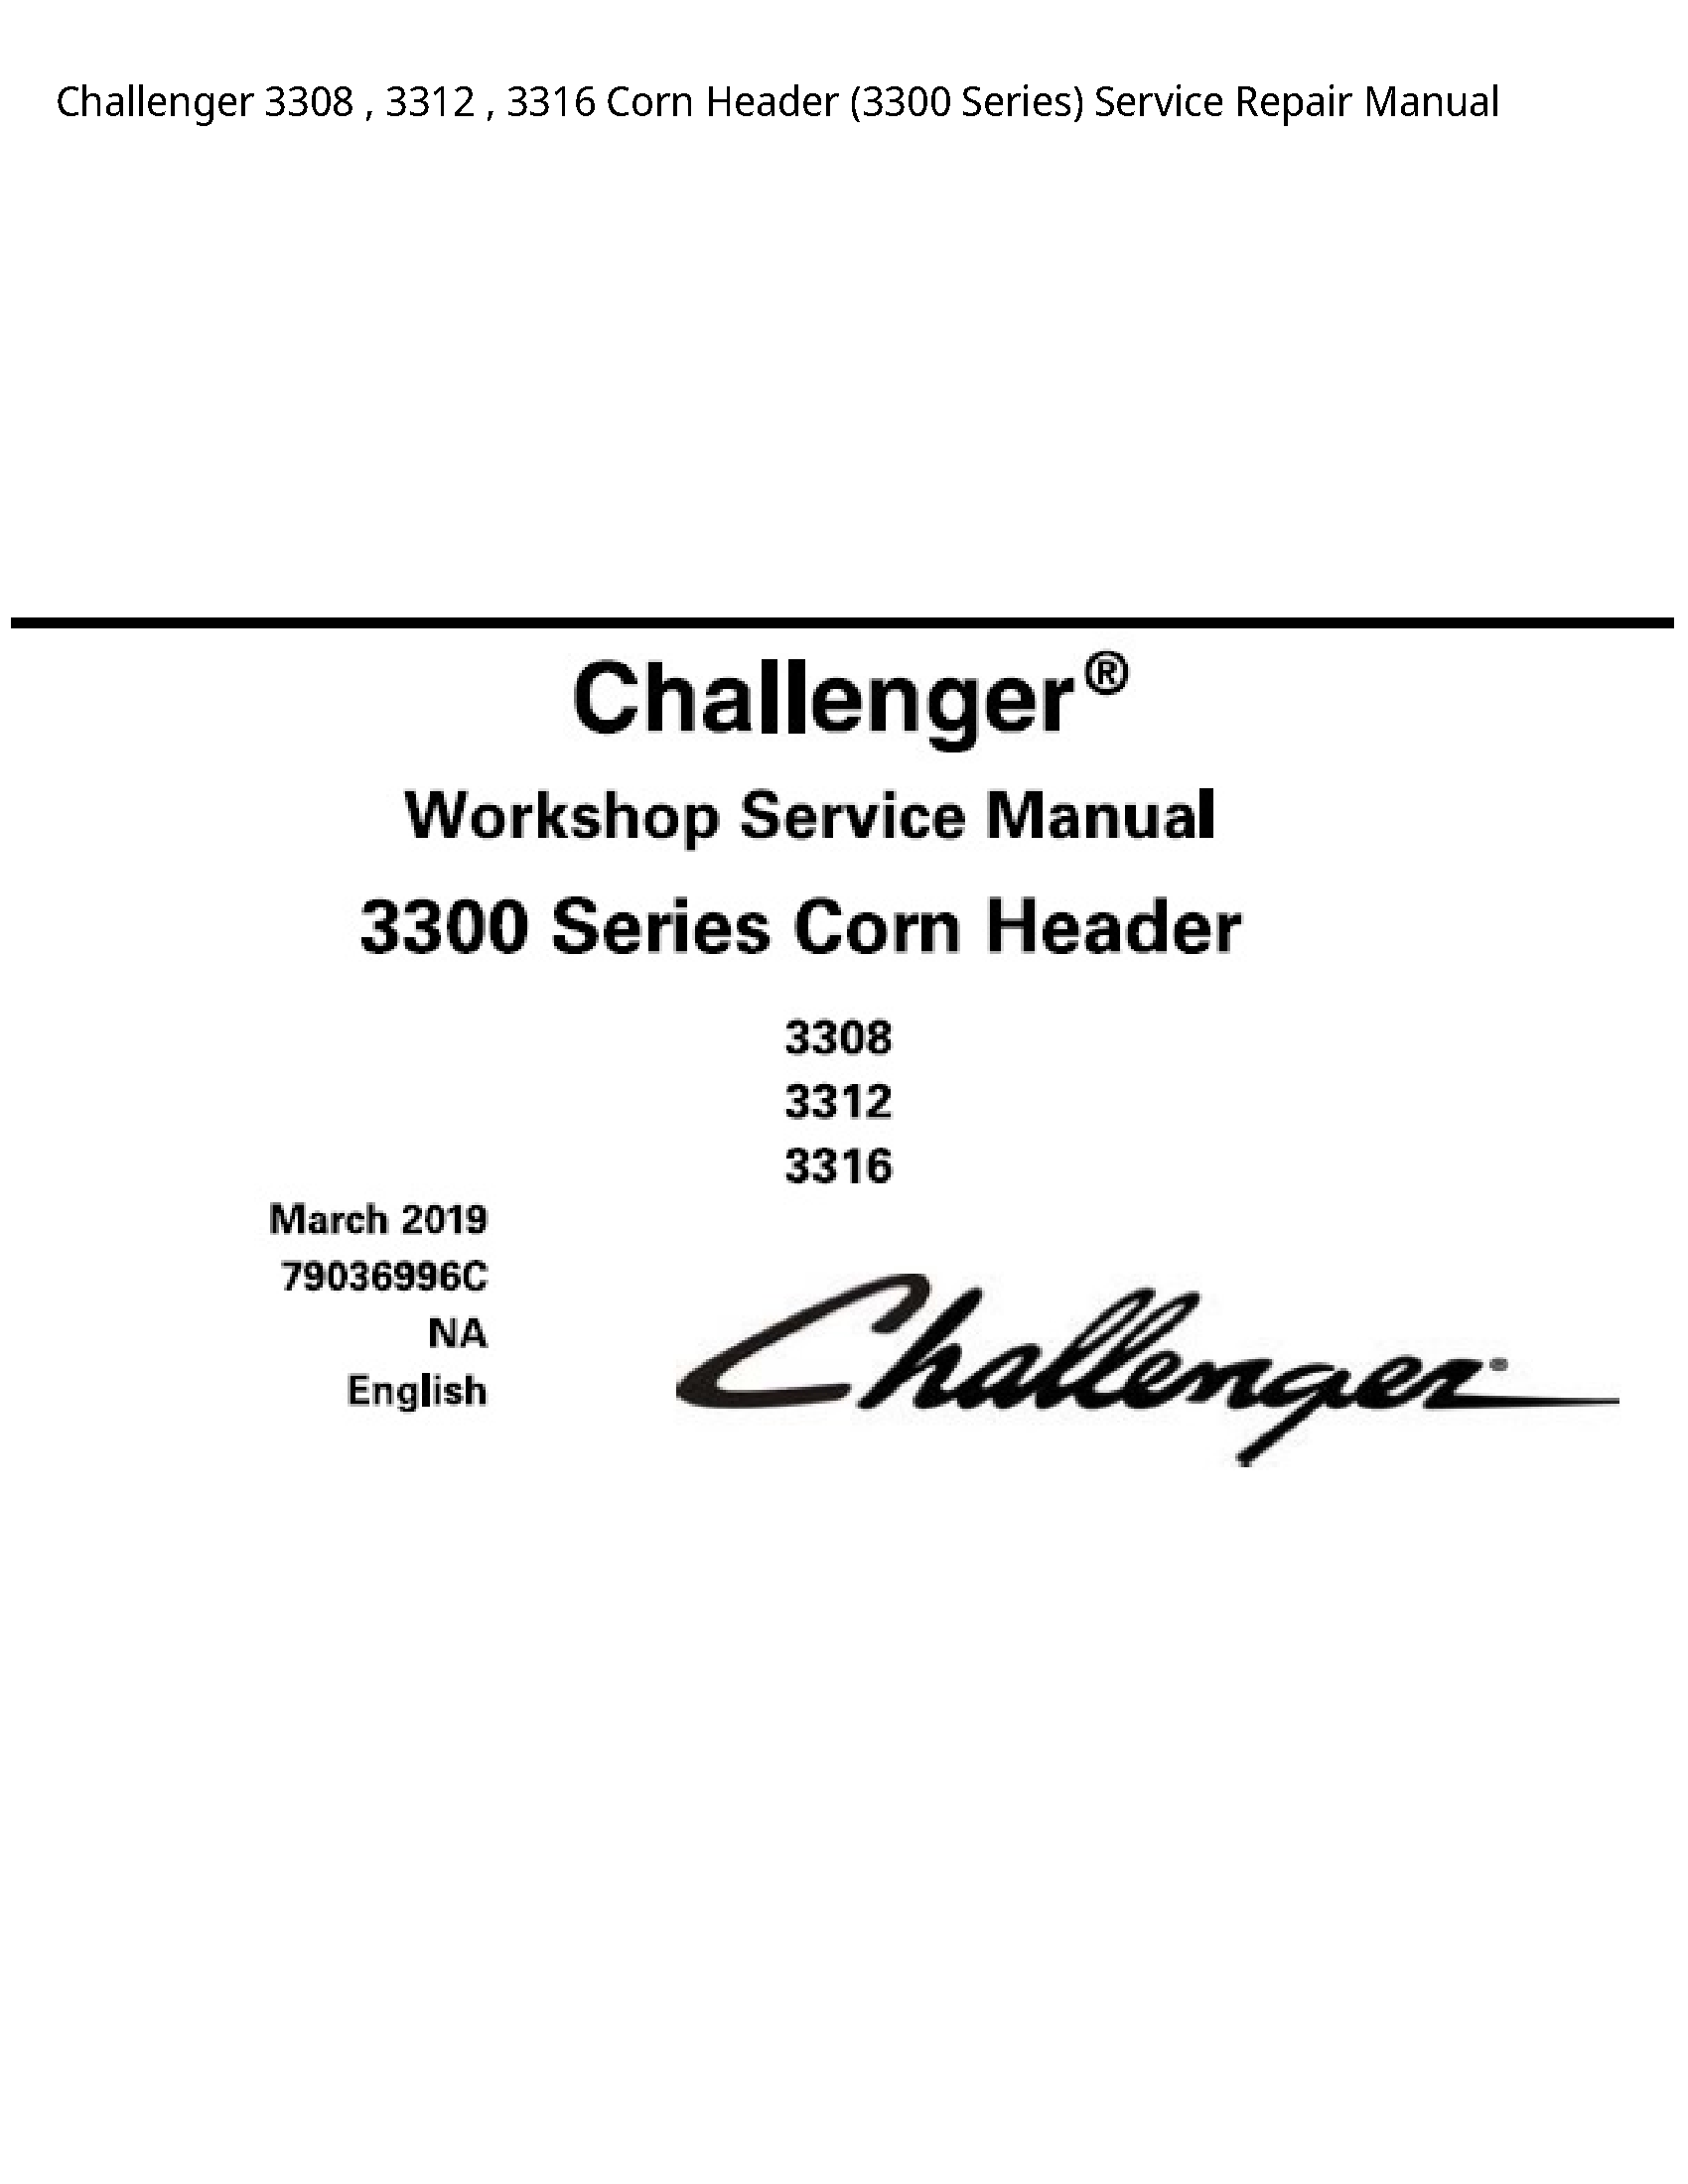 Challenger 3308 Corn Header Series) manual